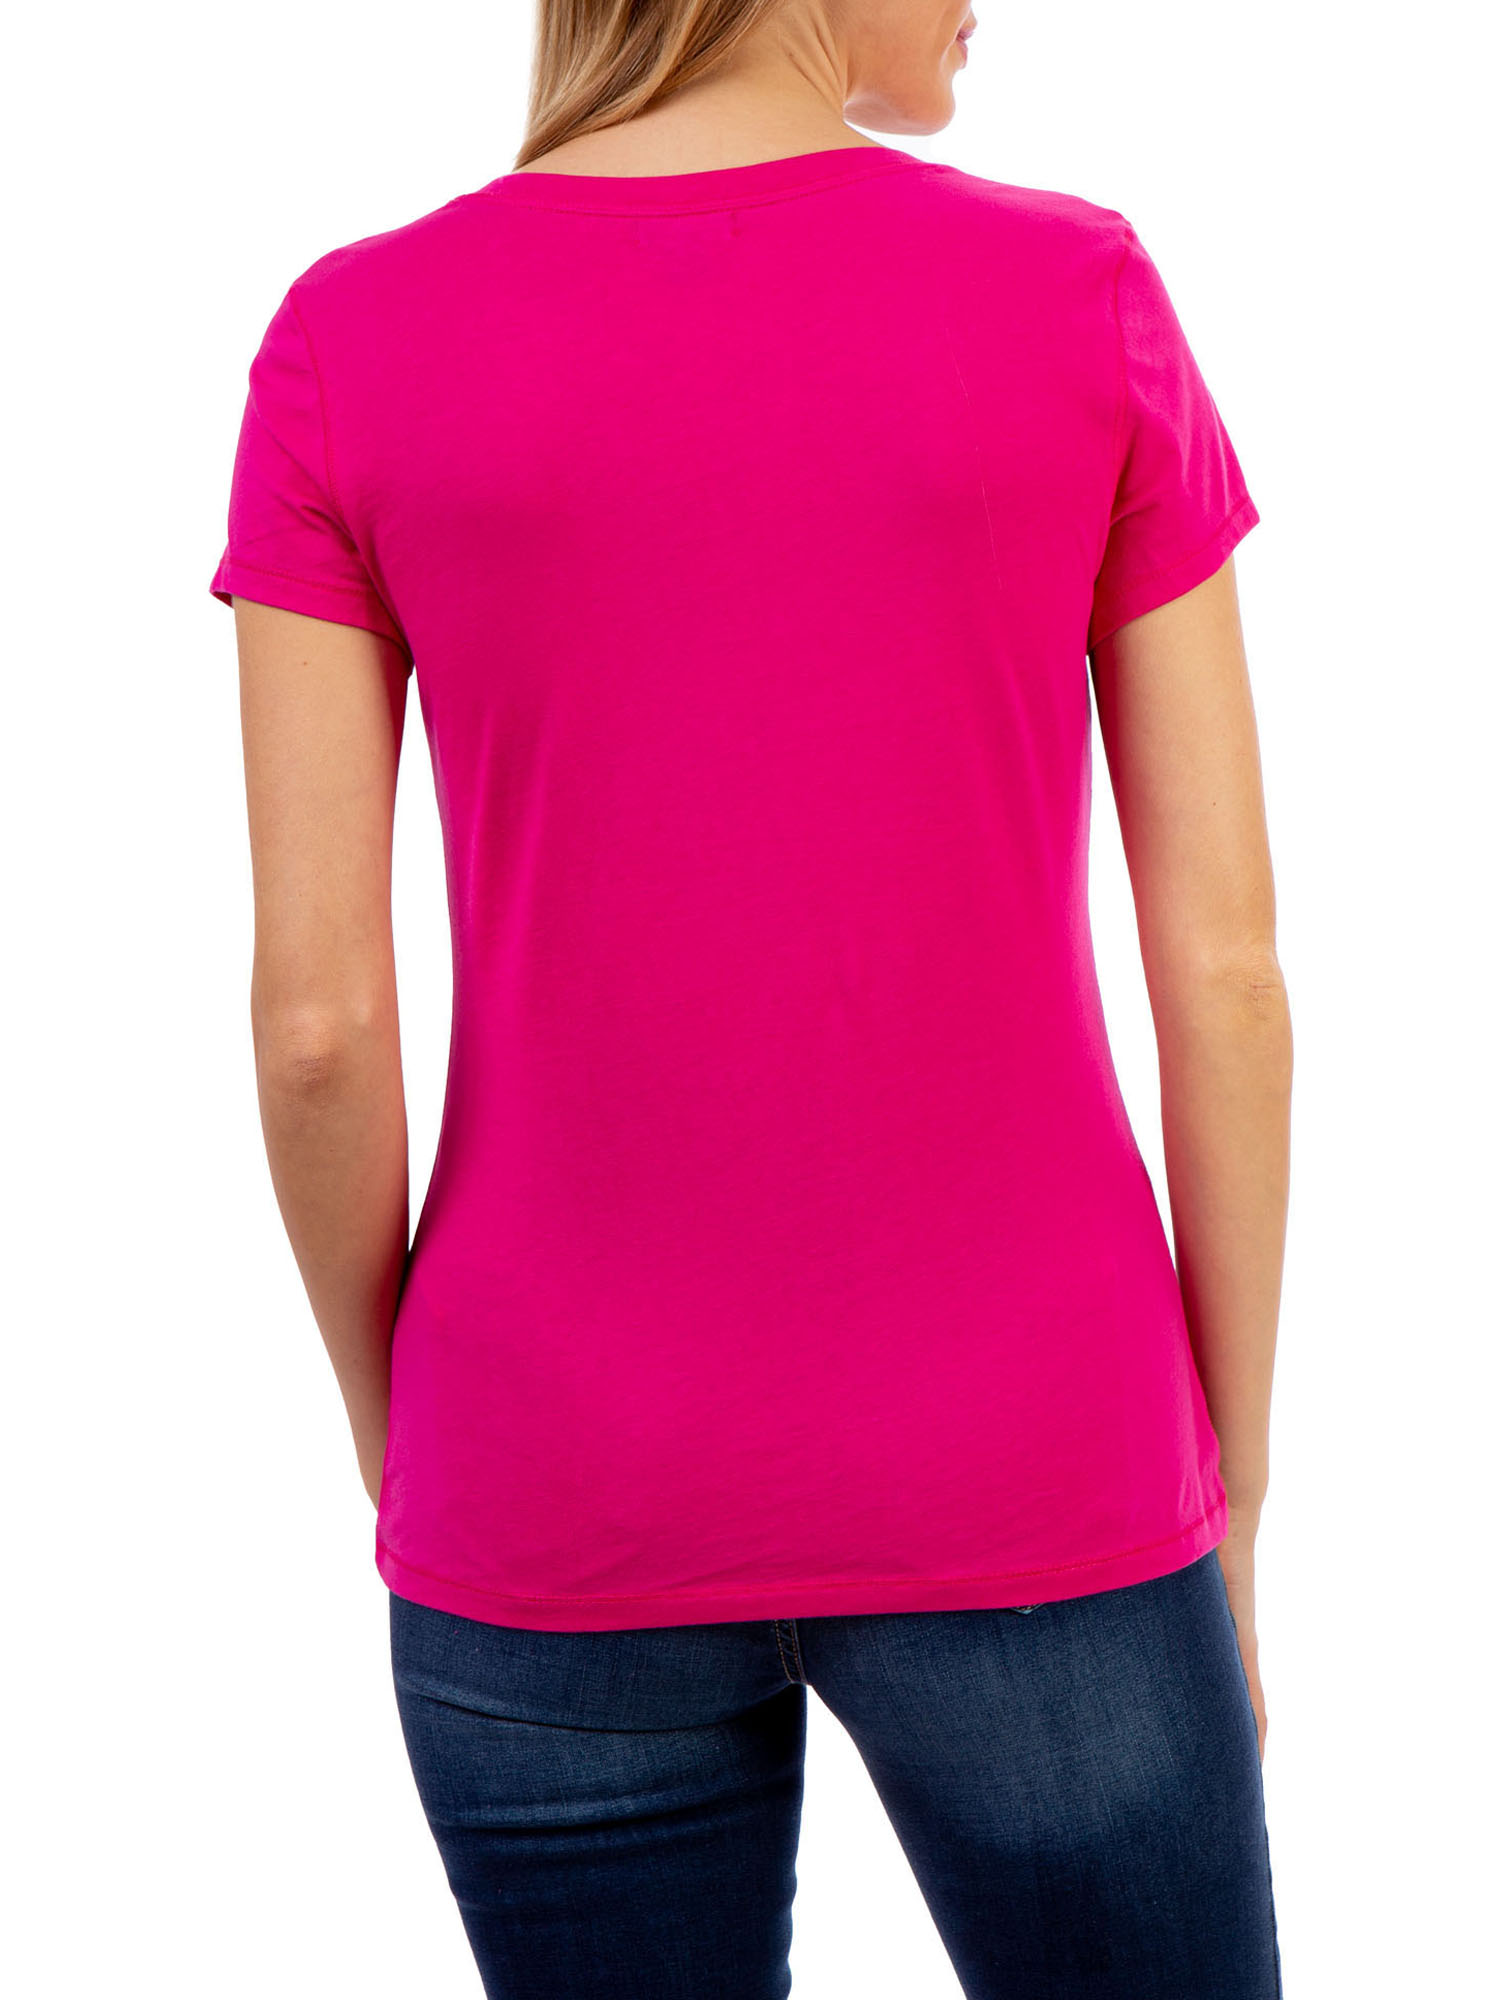 U.S. Polo Assn. V-Neck T-Shirt 2pc Pack Women's - image 5 of 8